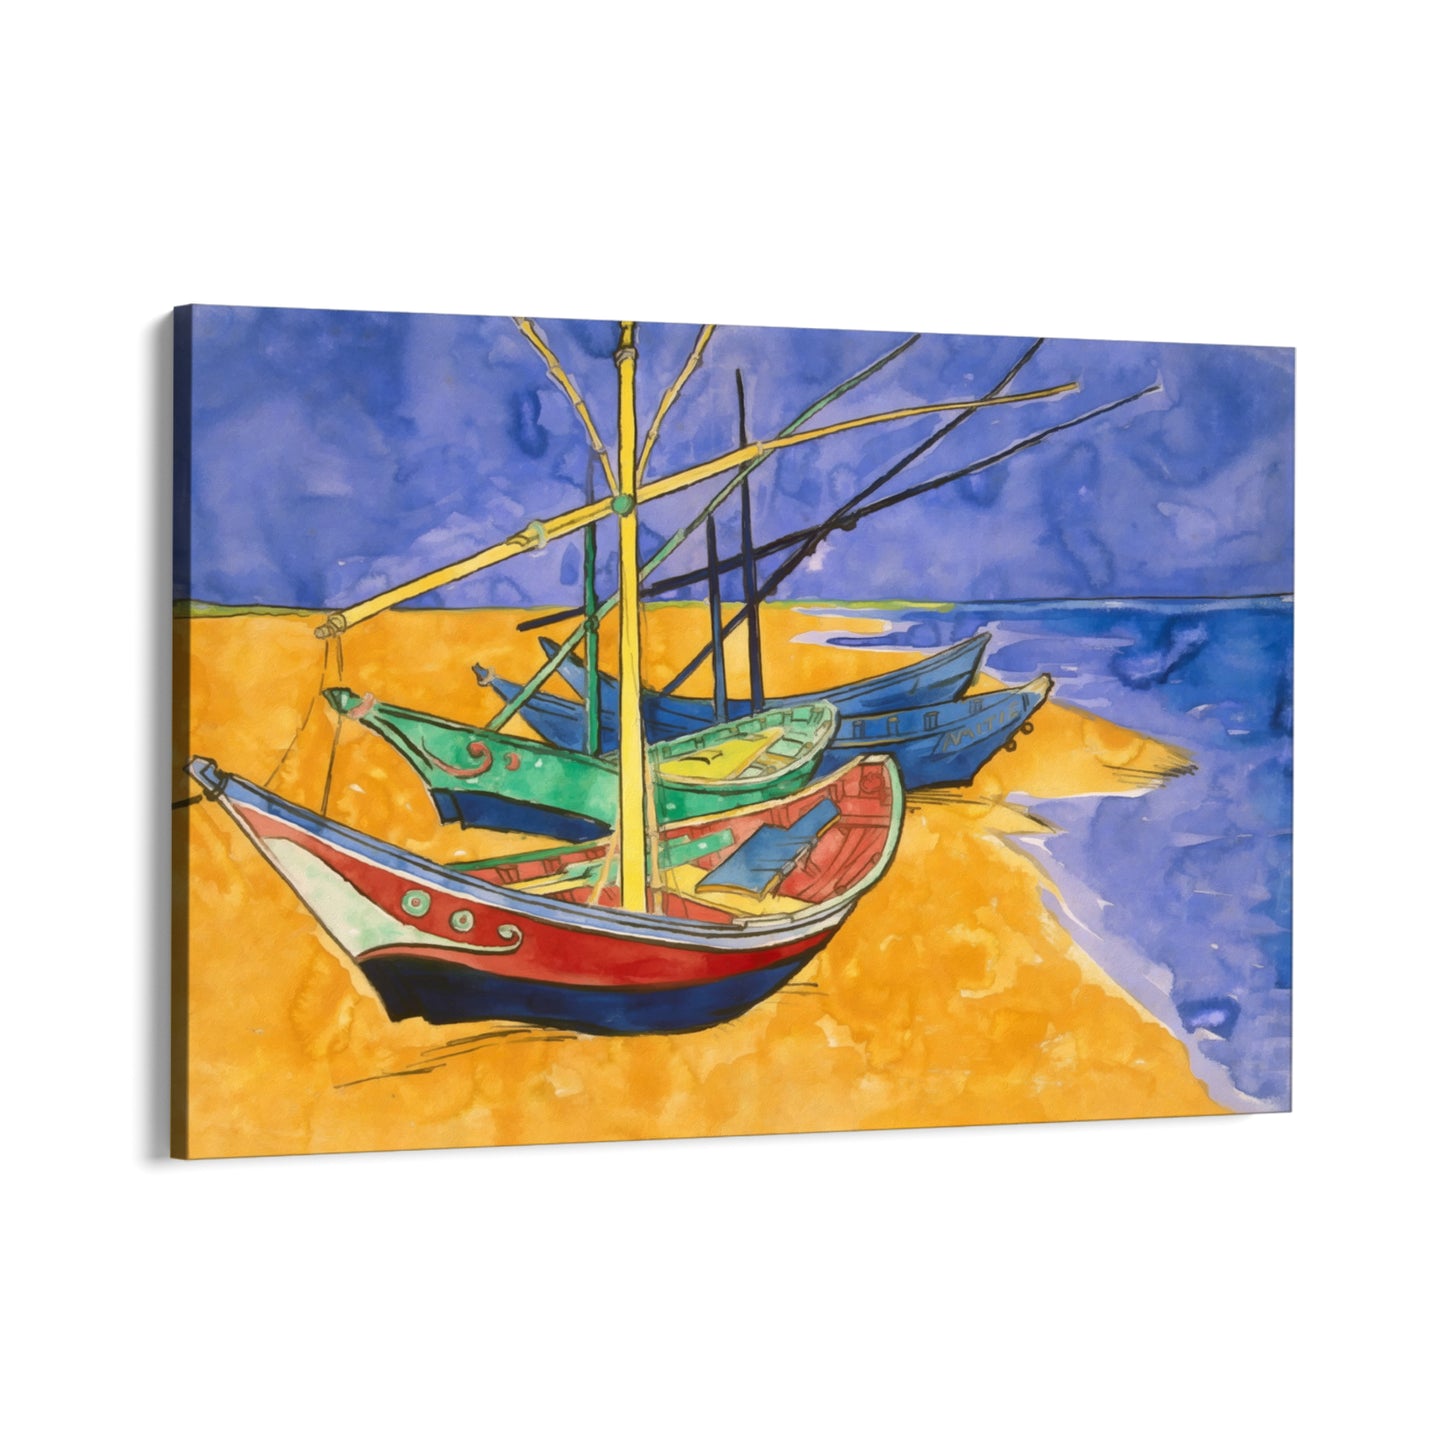 Rybárske člny na pláži I, Vincent Van Gogh